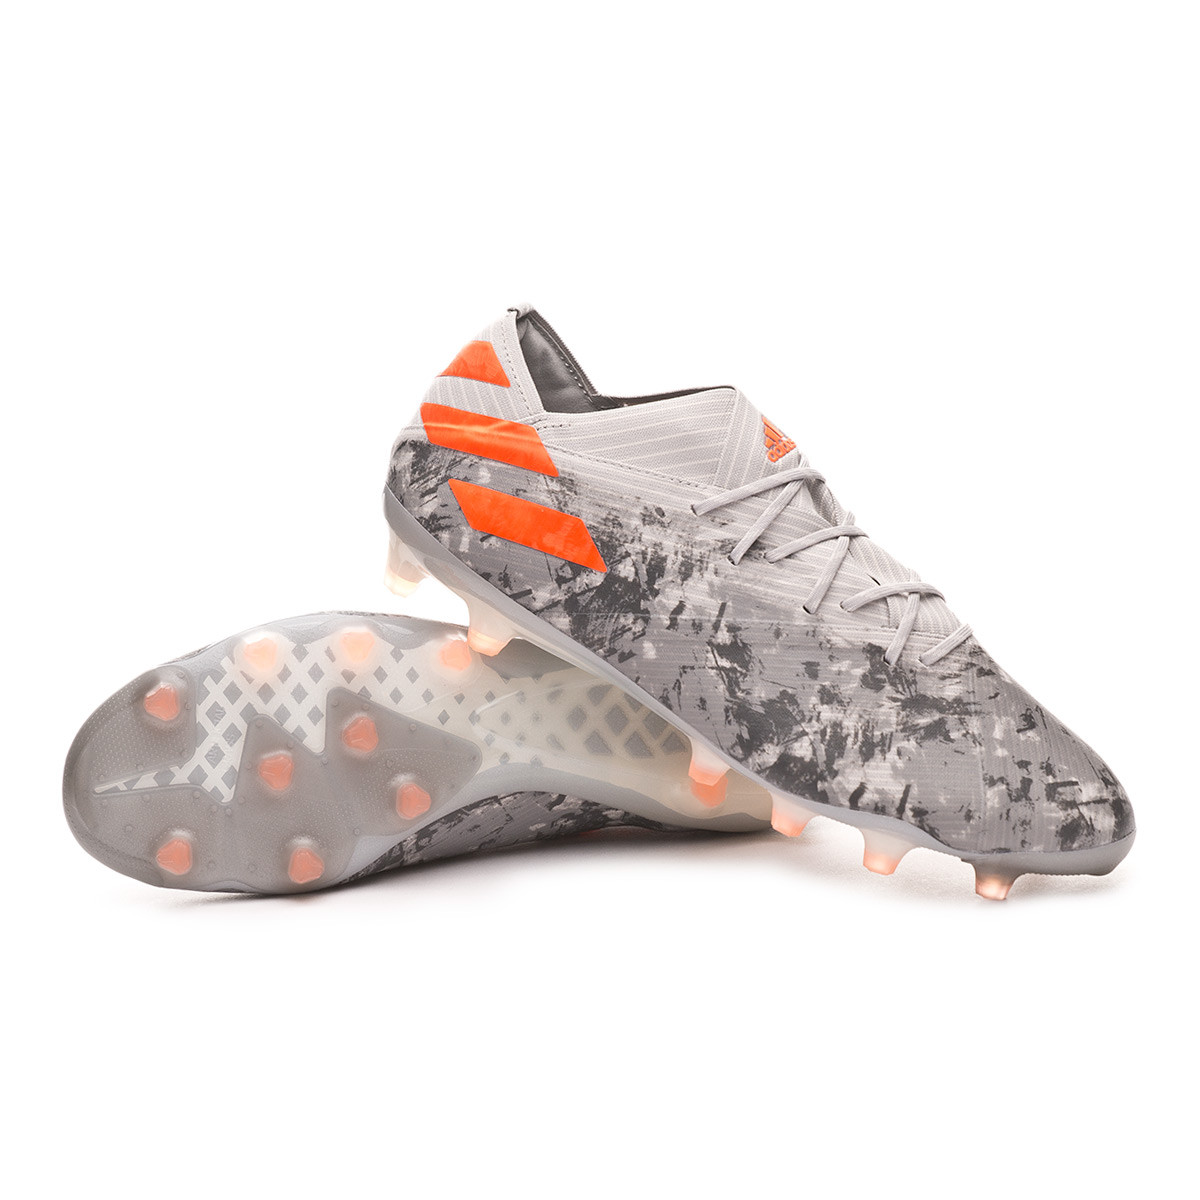 Chaussure de foot adidas Nemeziz 19.1 AG Grey two-Solar orange 